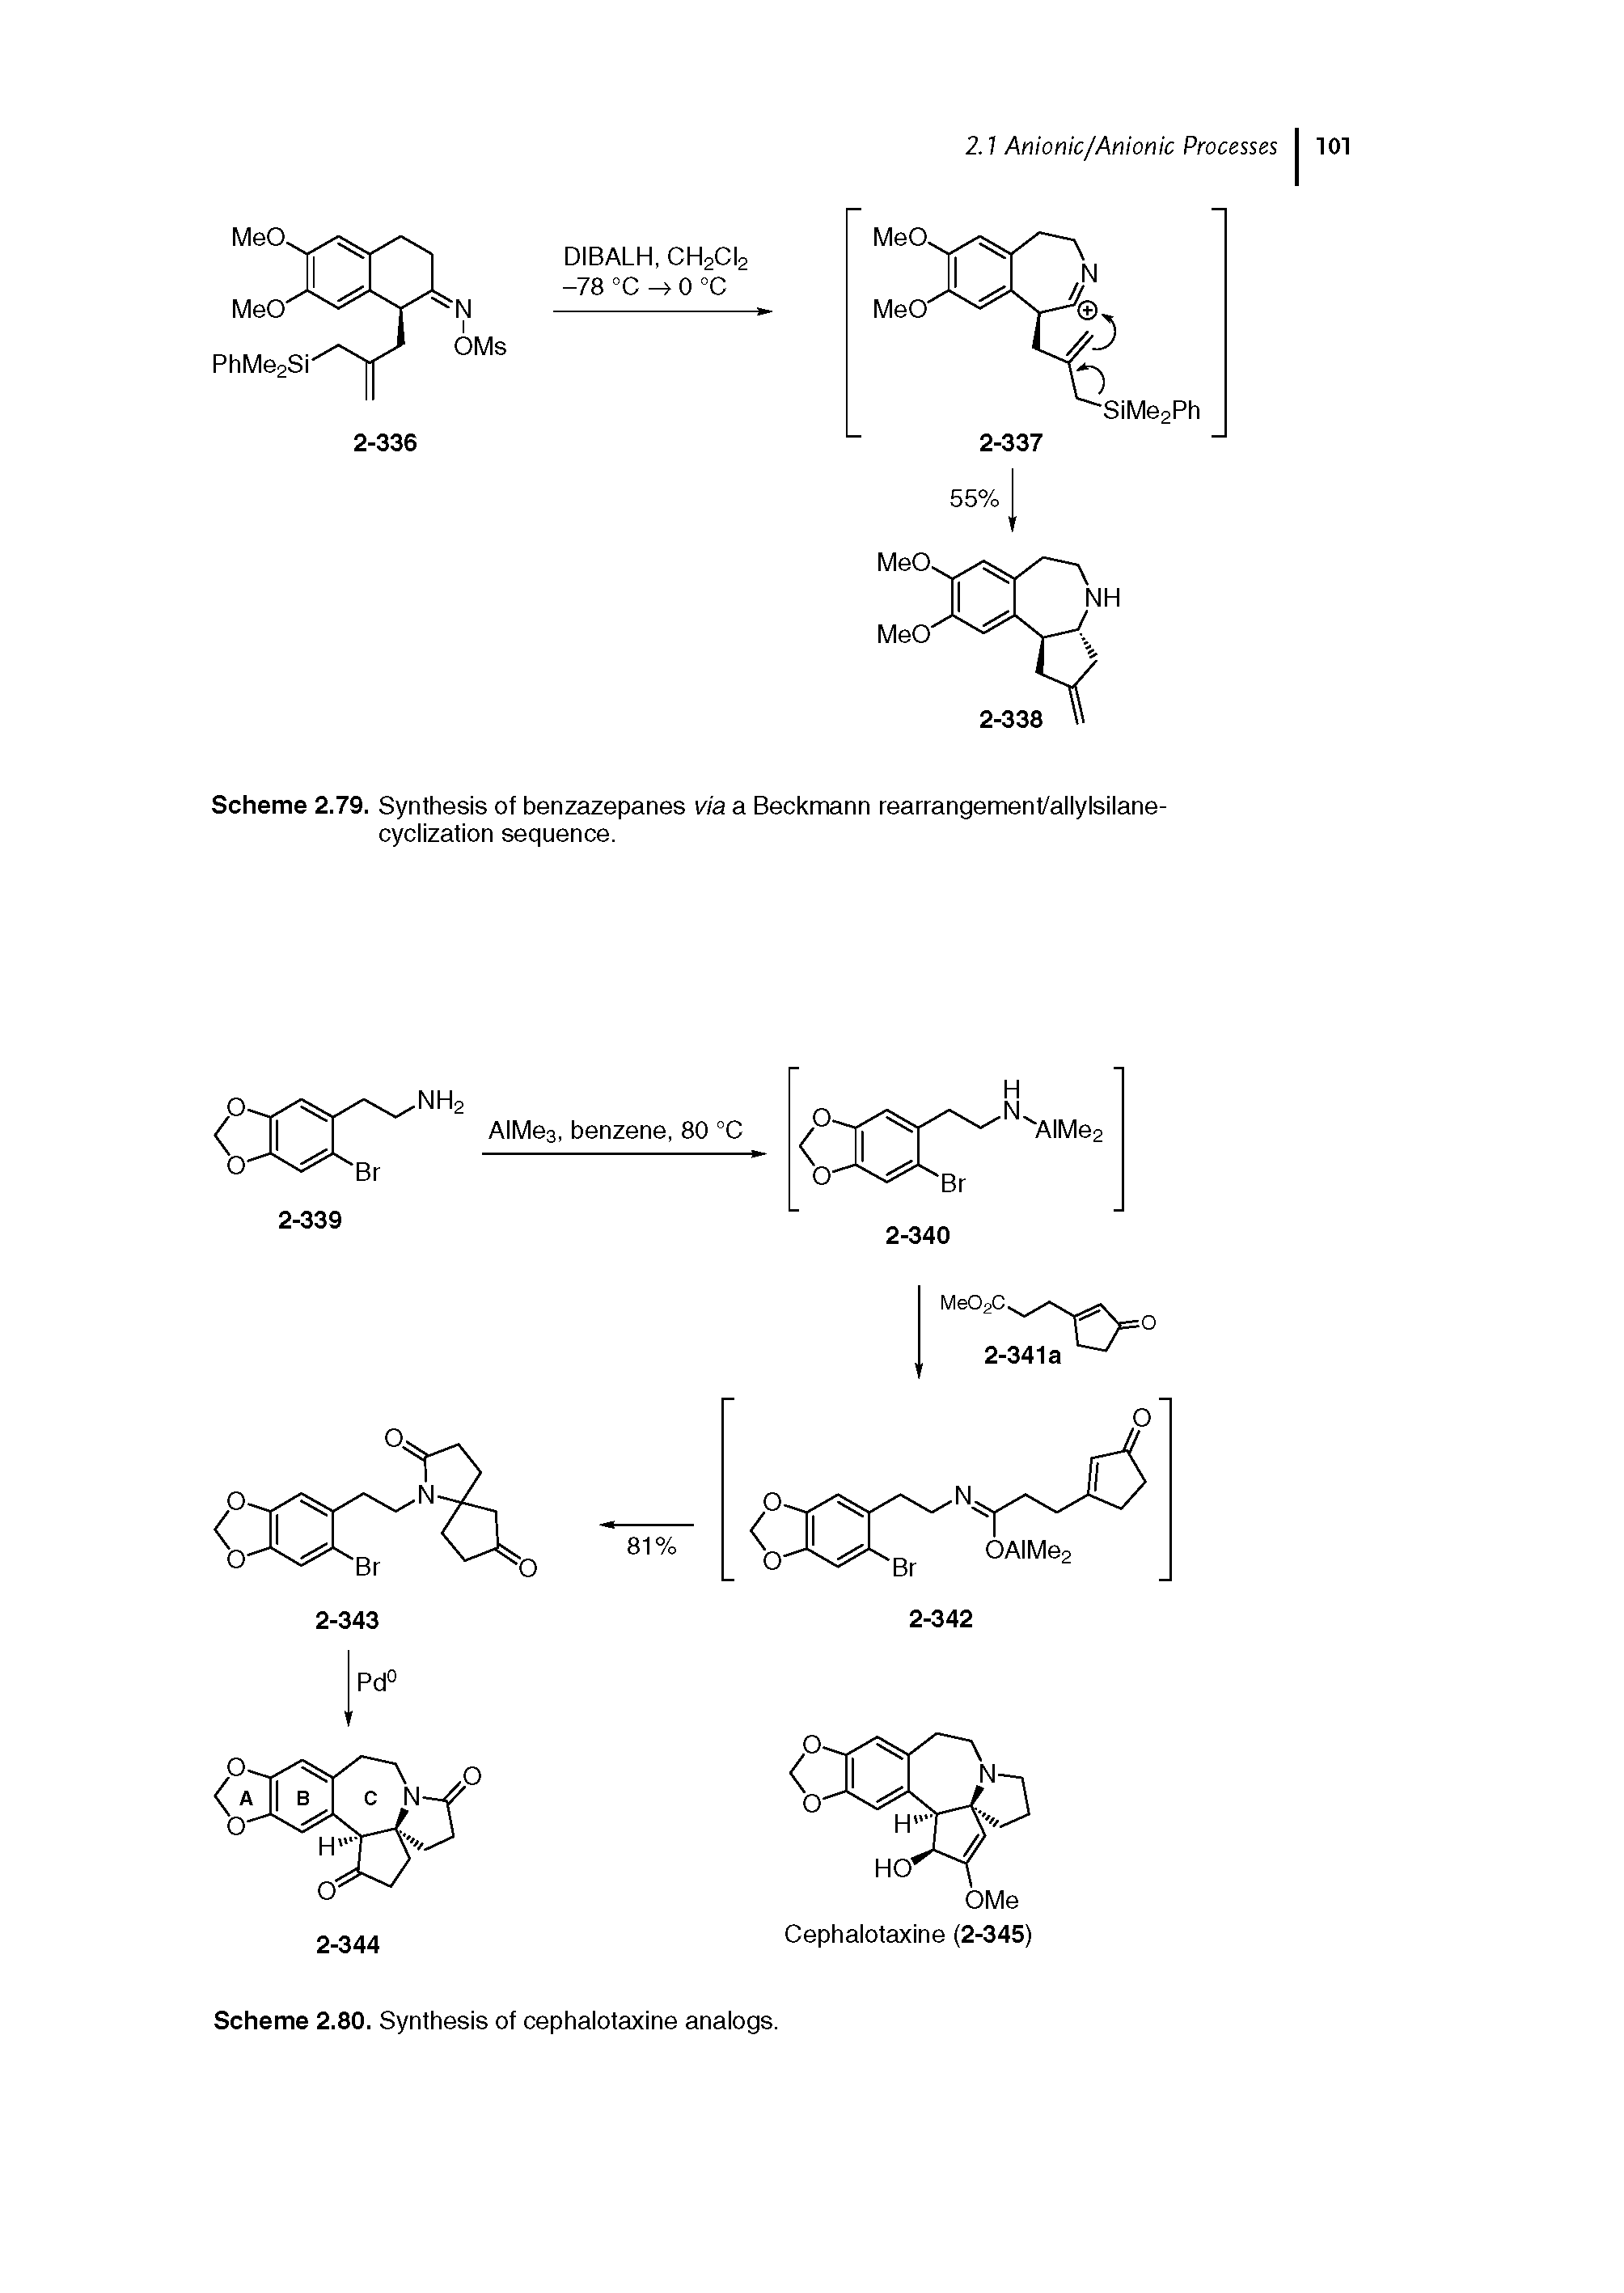 Scheme 2.79. Synthesis of benzazepanes via a Beckmann rearrangement/allylsilane-cyclization sequence.